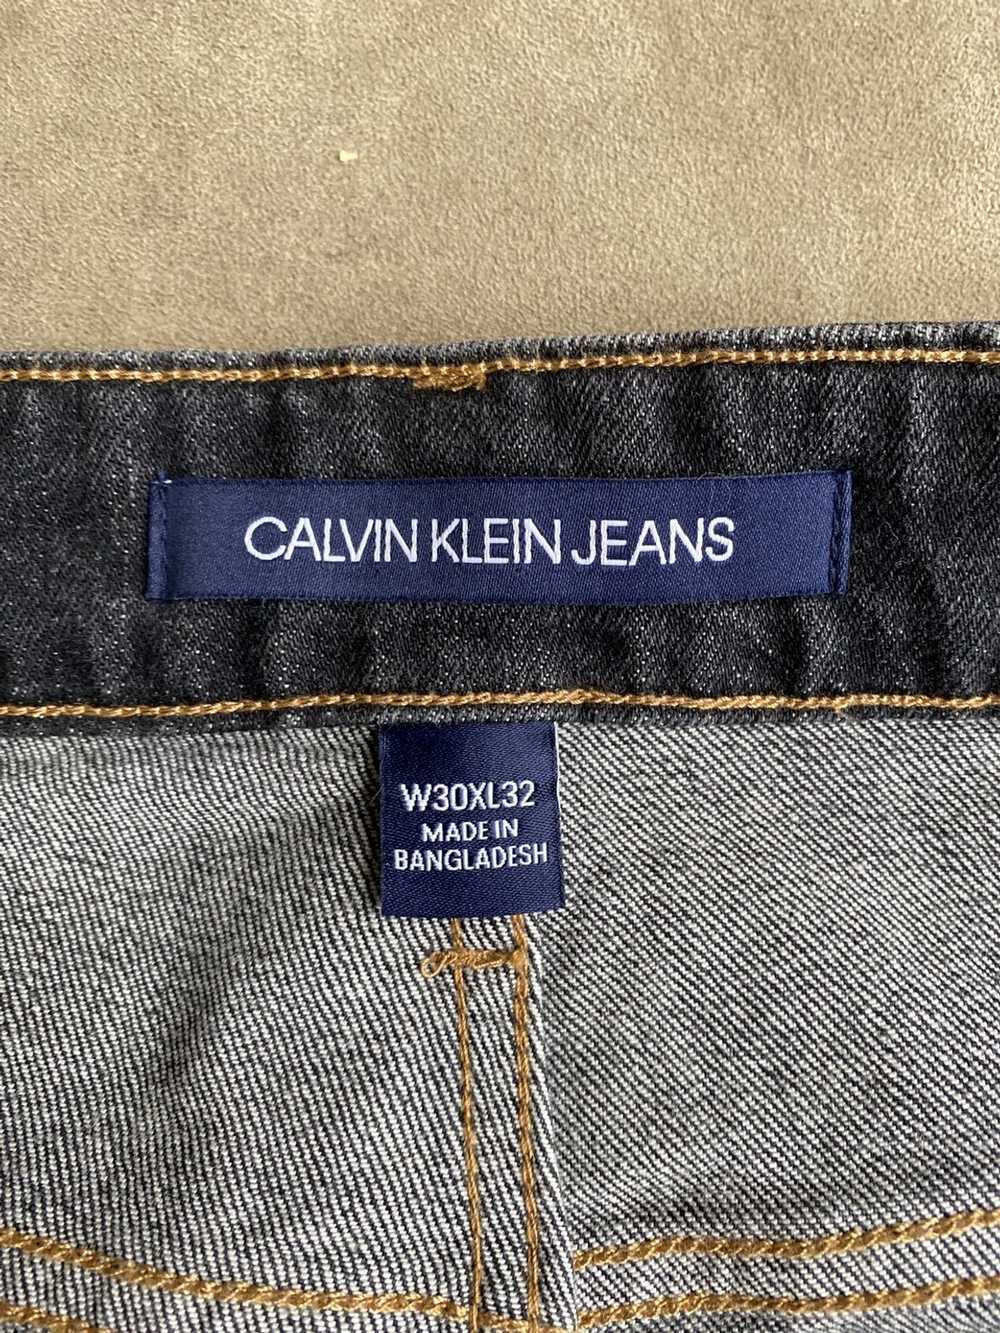 Calvin Klein Calvin Klein Jeans Black - image 4